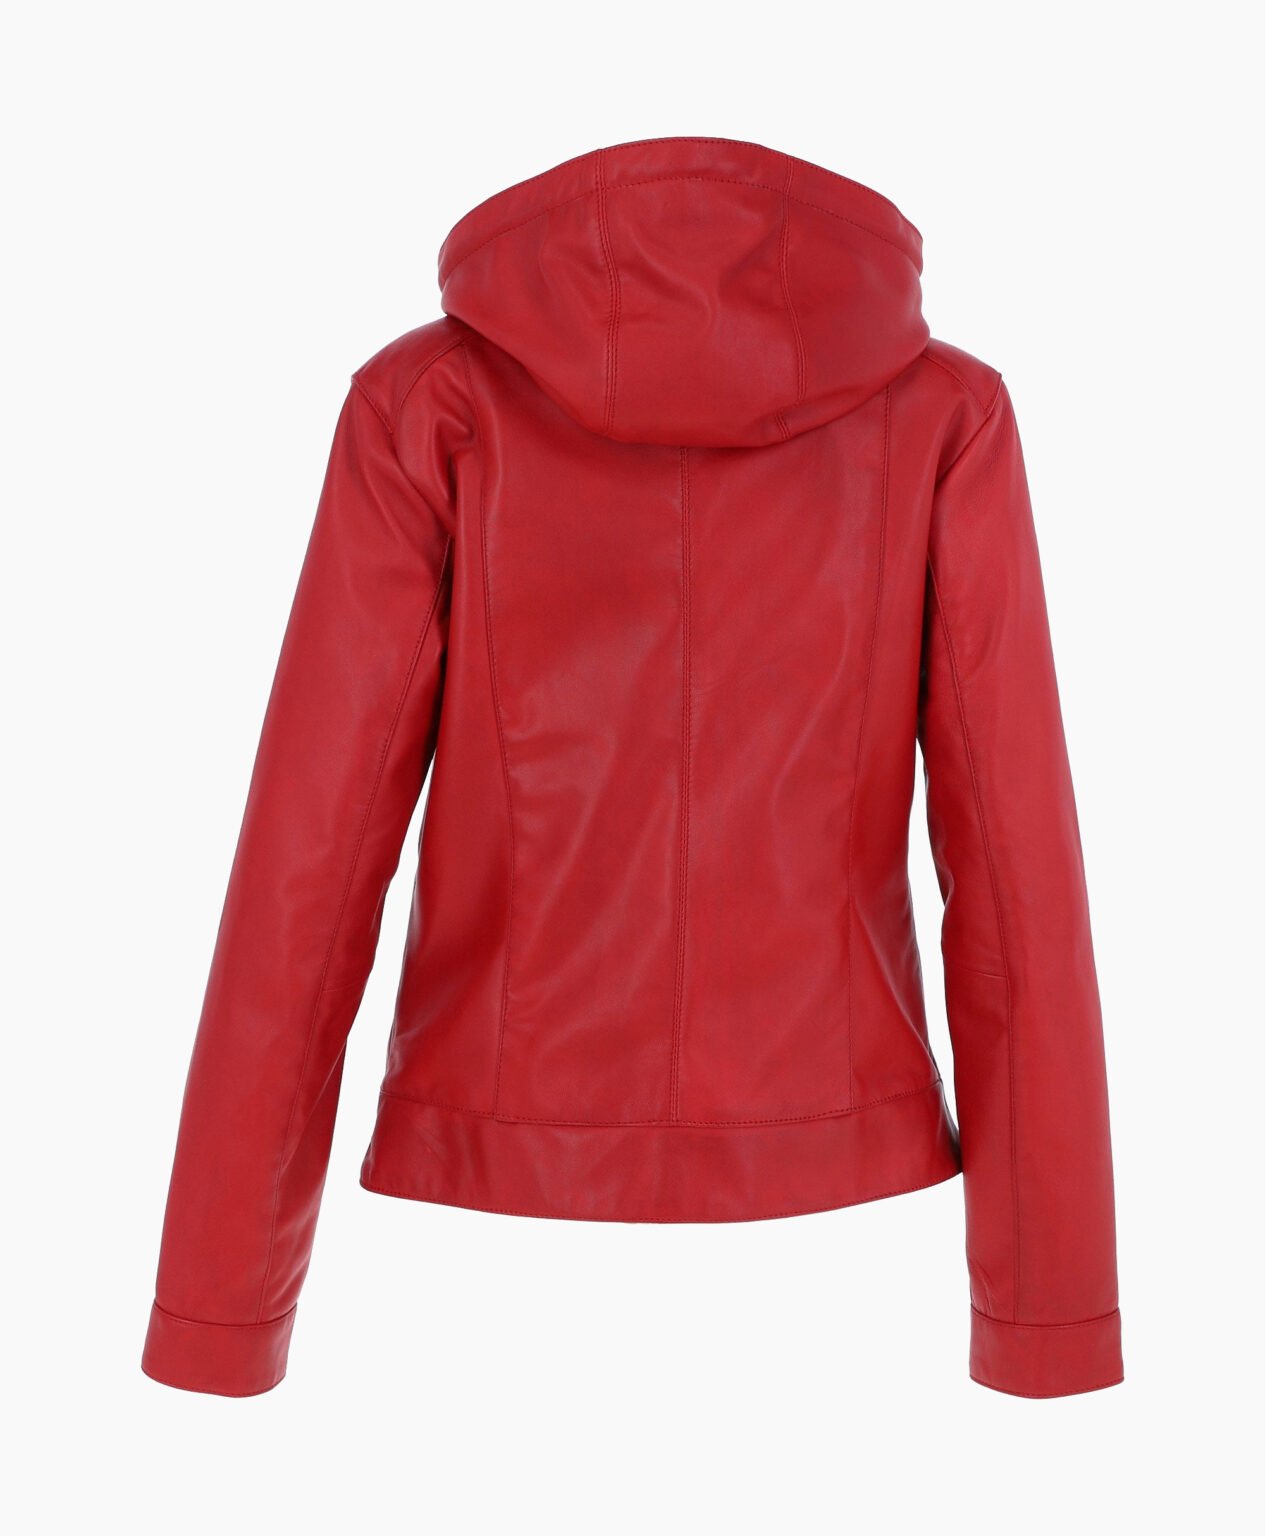 vogue-jacket-leather-hooded-jacket-red-sarasota-image202